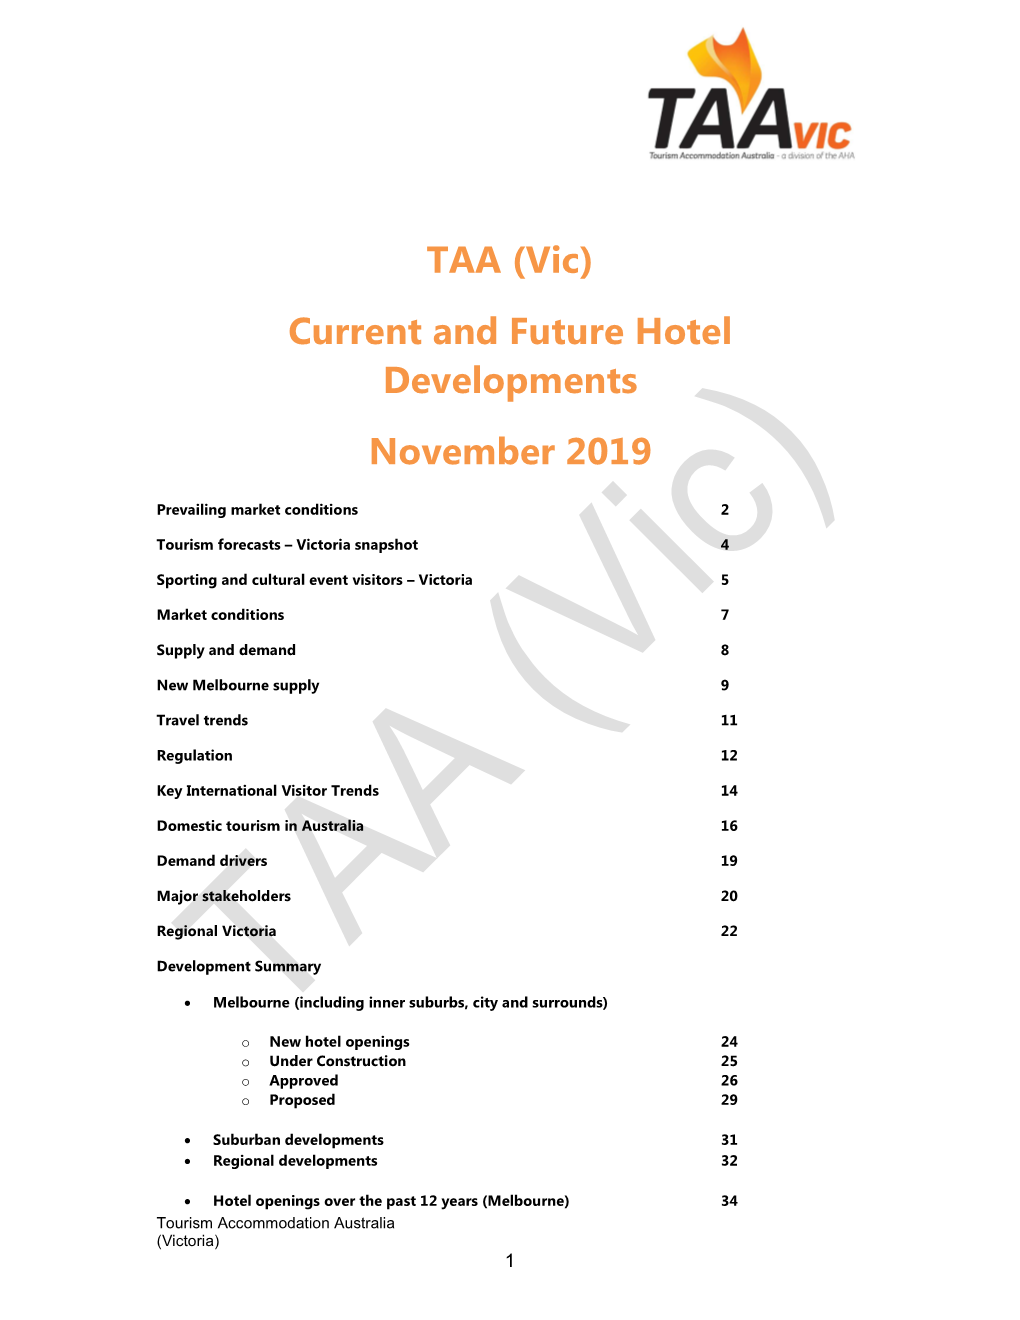 TAA (Vic) Current and Future Hotel Developments November 2019